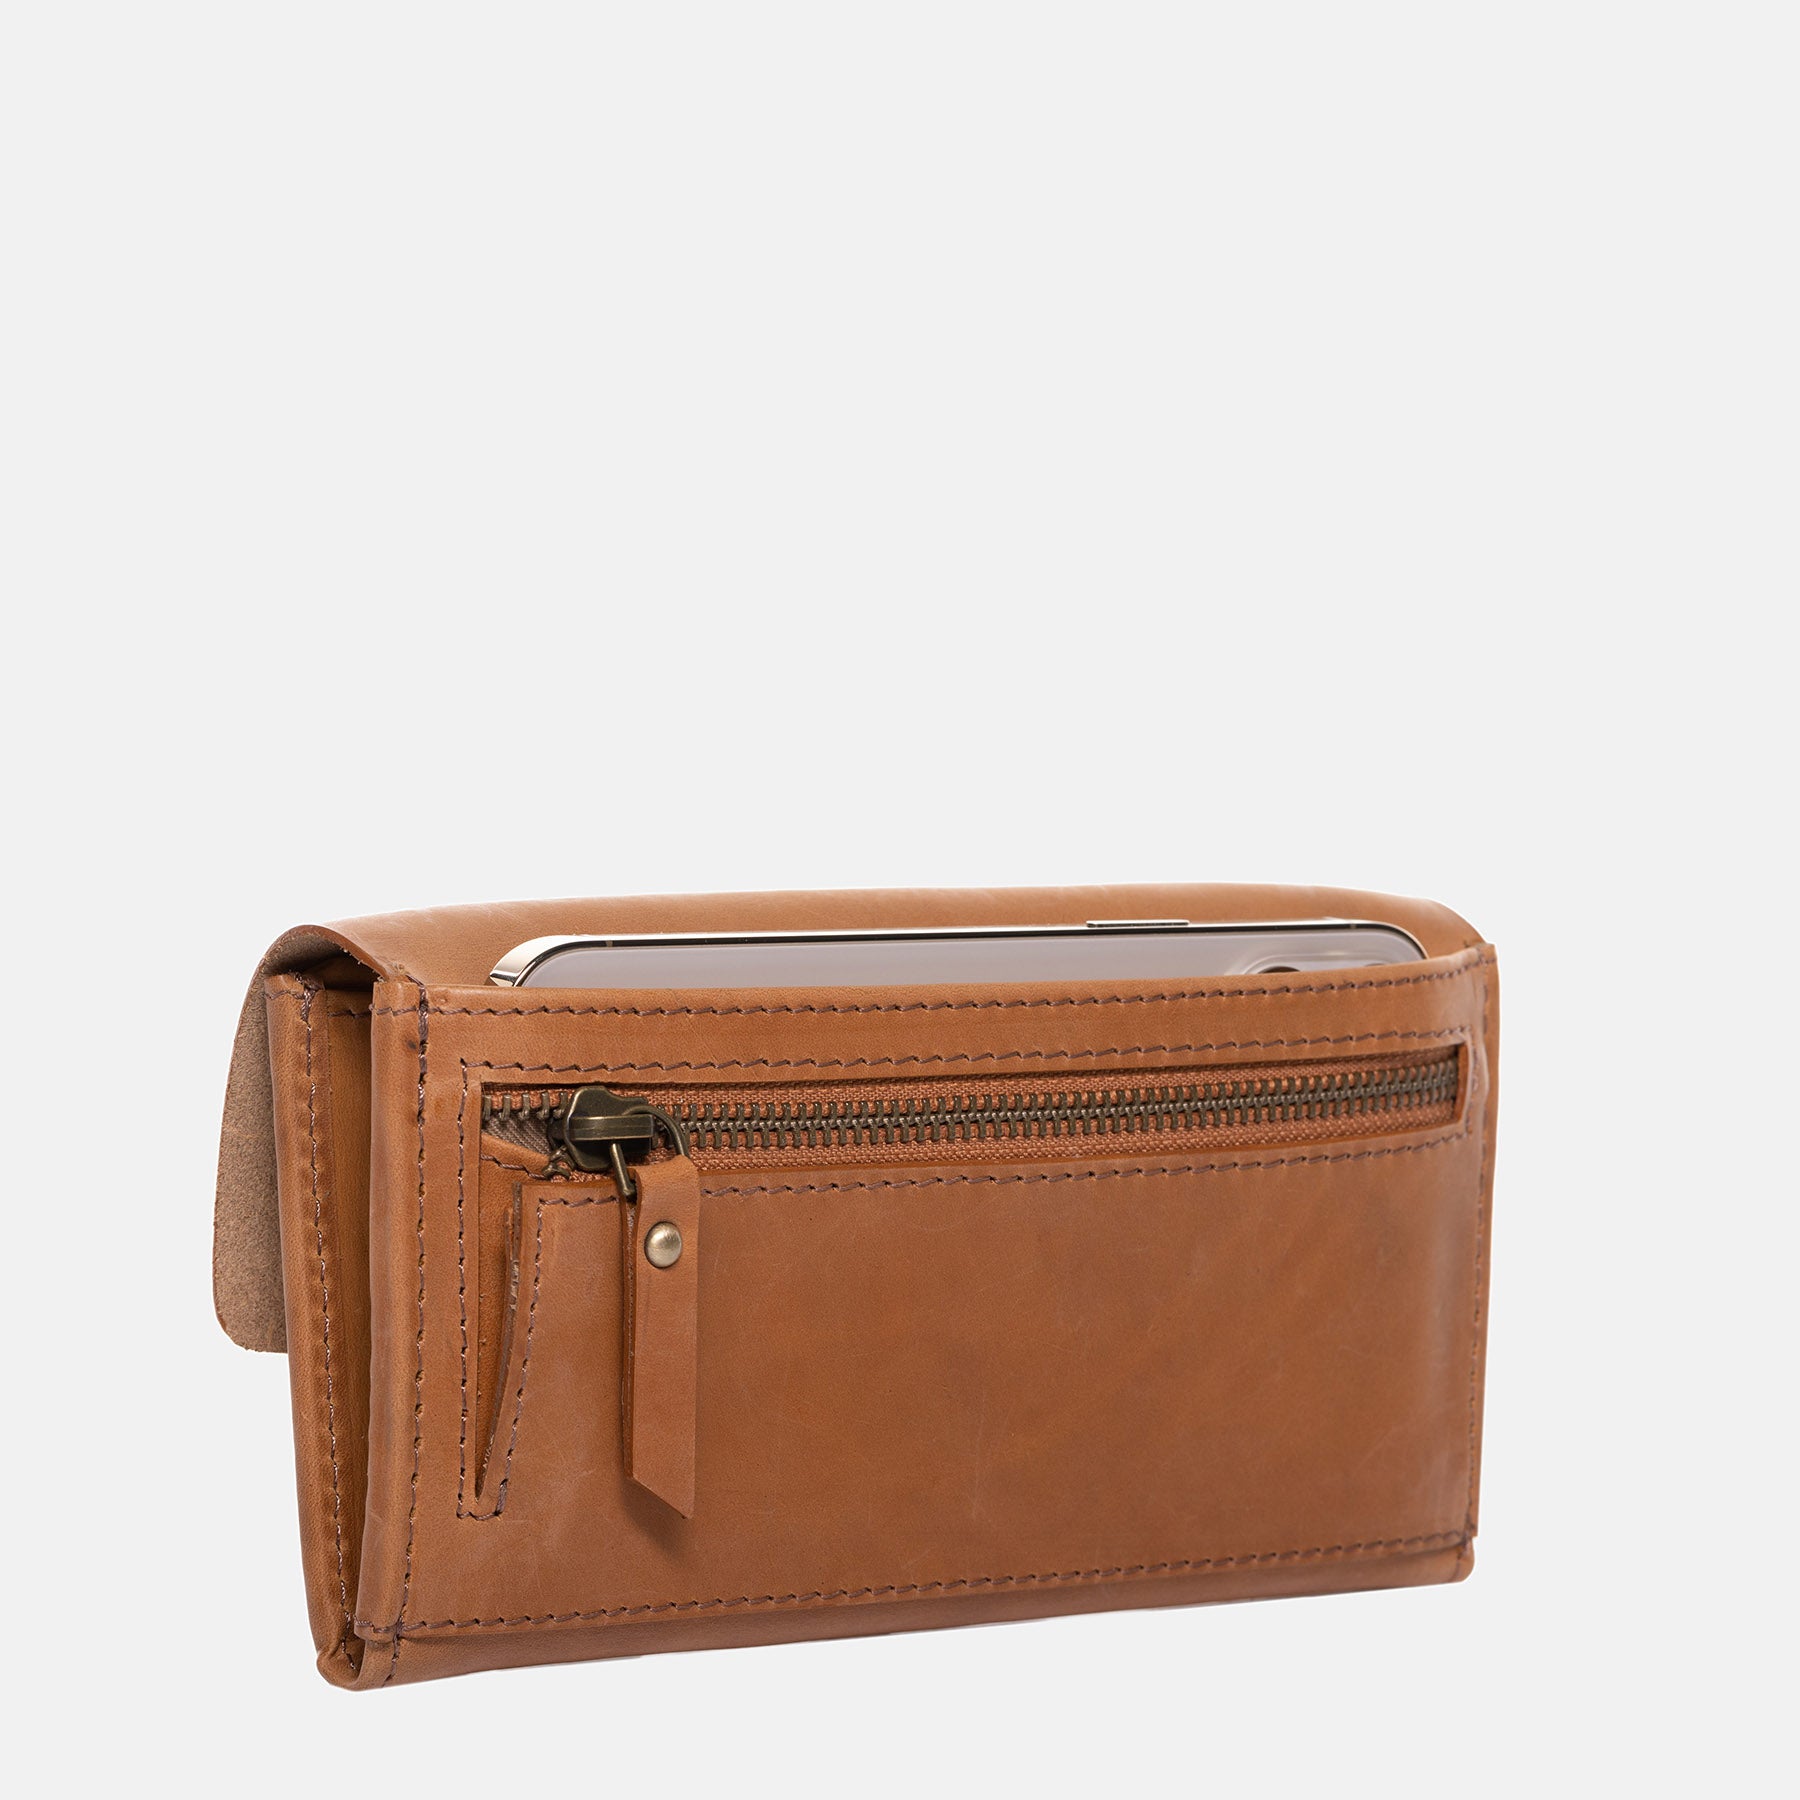 Wallet ELSA smooth leather brown